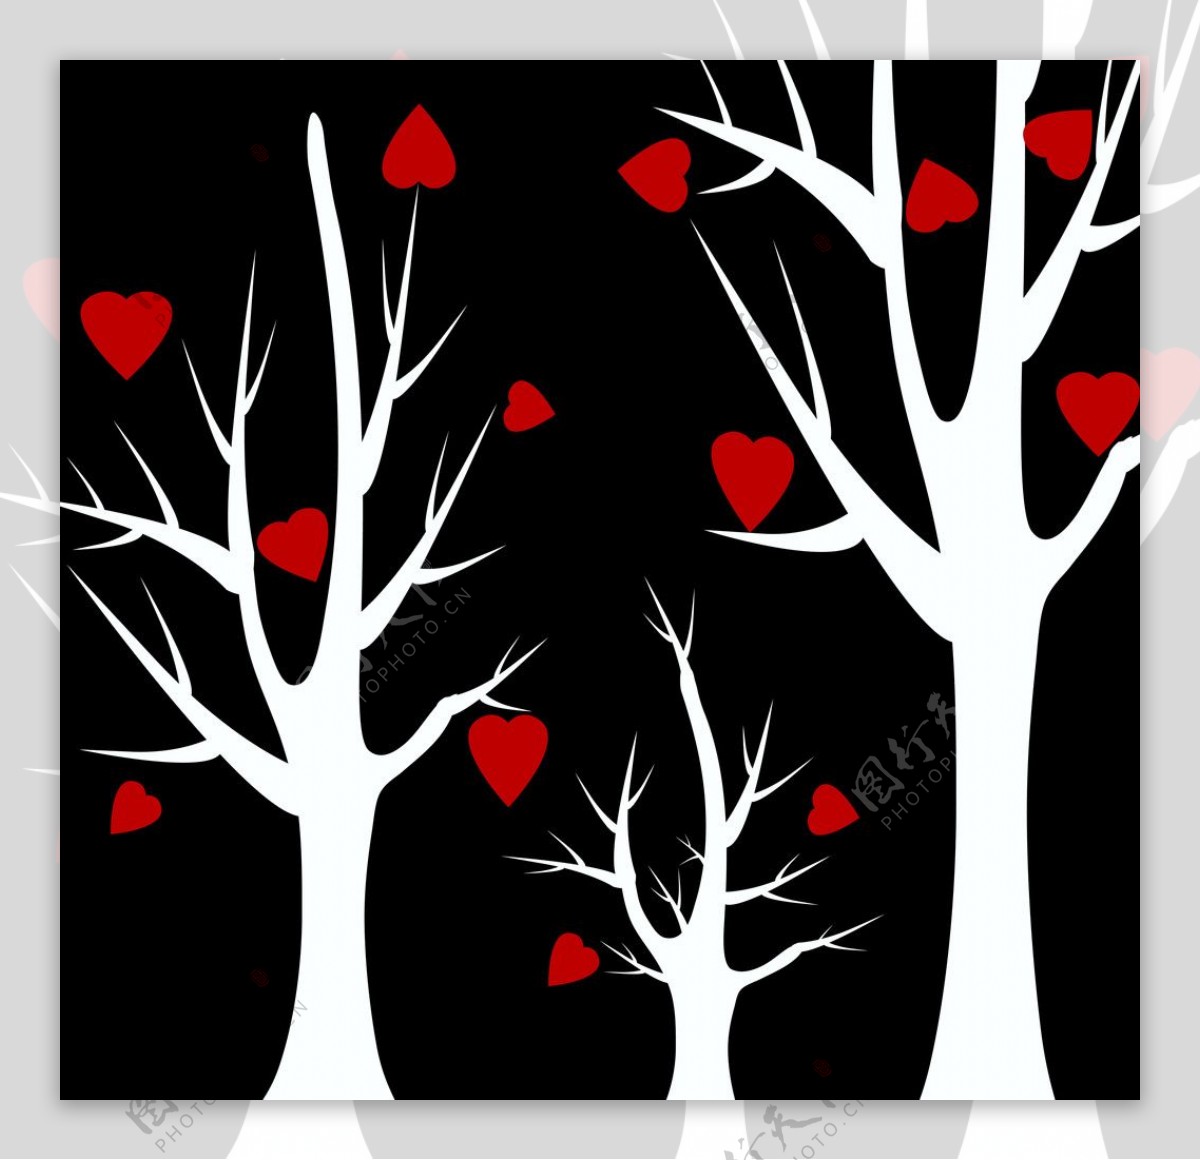 A red heart shaped tree at sunset. – Jenn Nixon